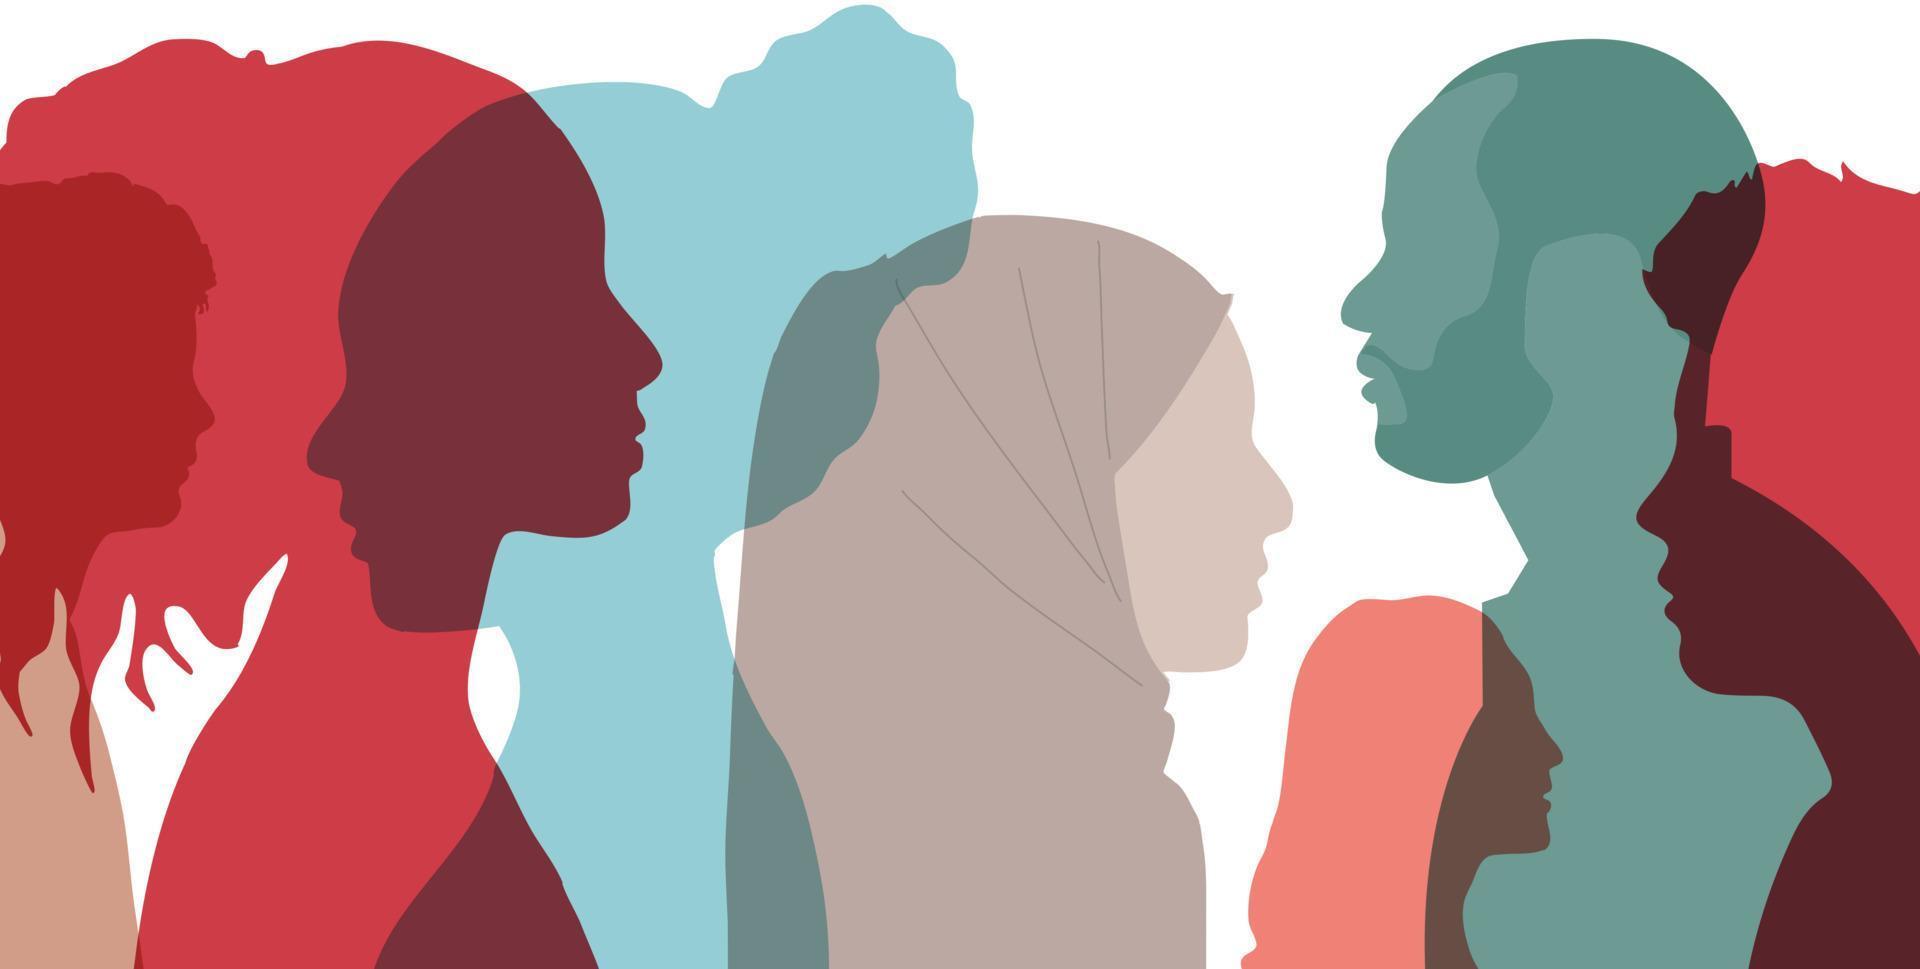 mujeres y grupo de perfil de silueta masculina de diversas culturas. vector. vector